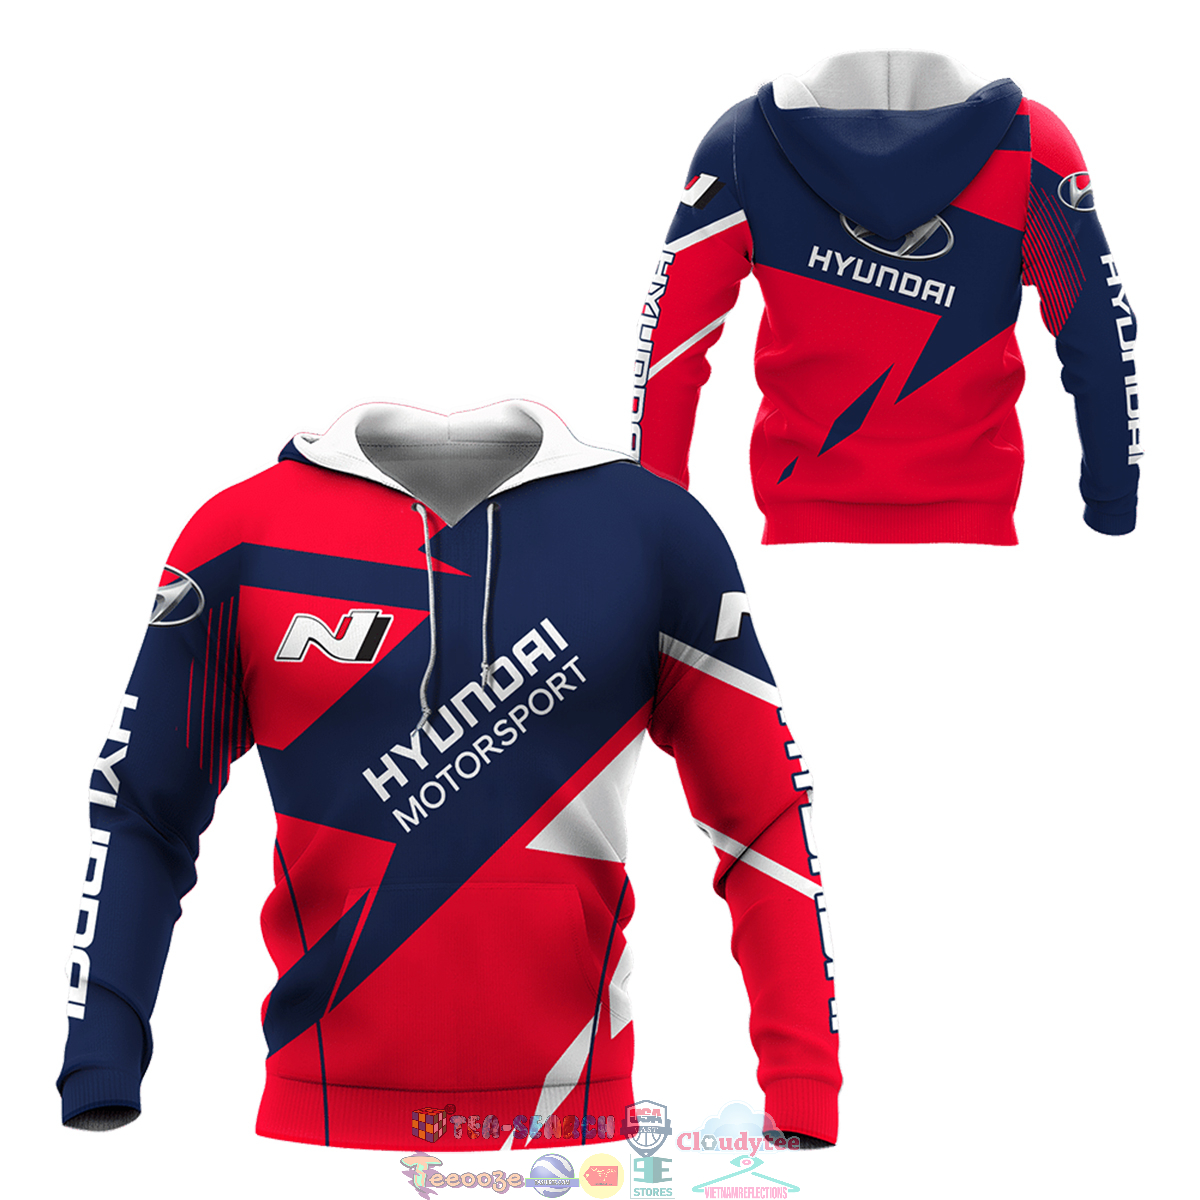 WaIveOso-TH100822-29xxxHyundai-Motorsport-ver-3-3D-hoodie-and-t-shirt3.jpg